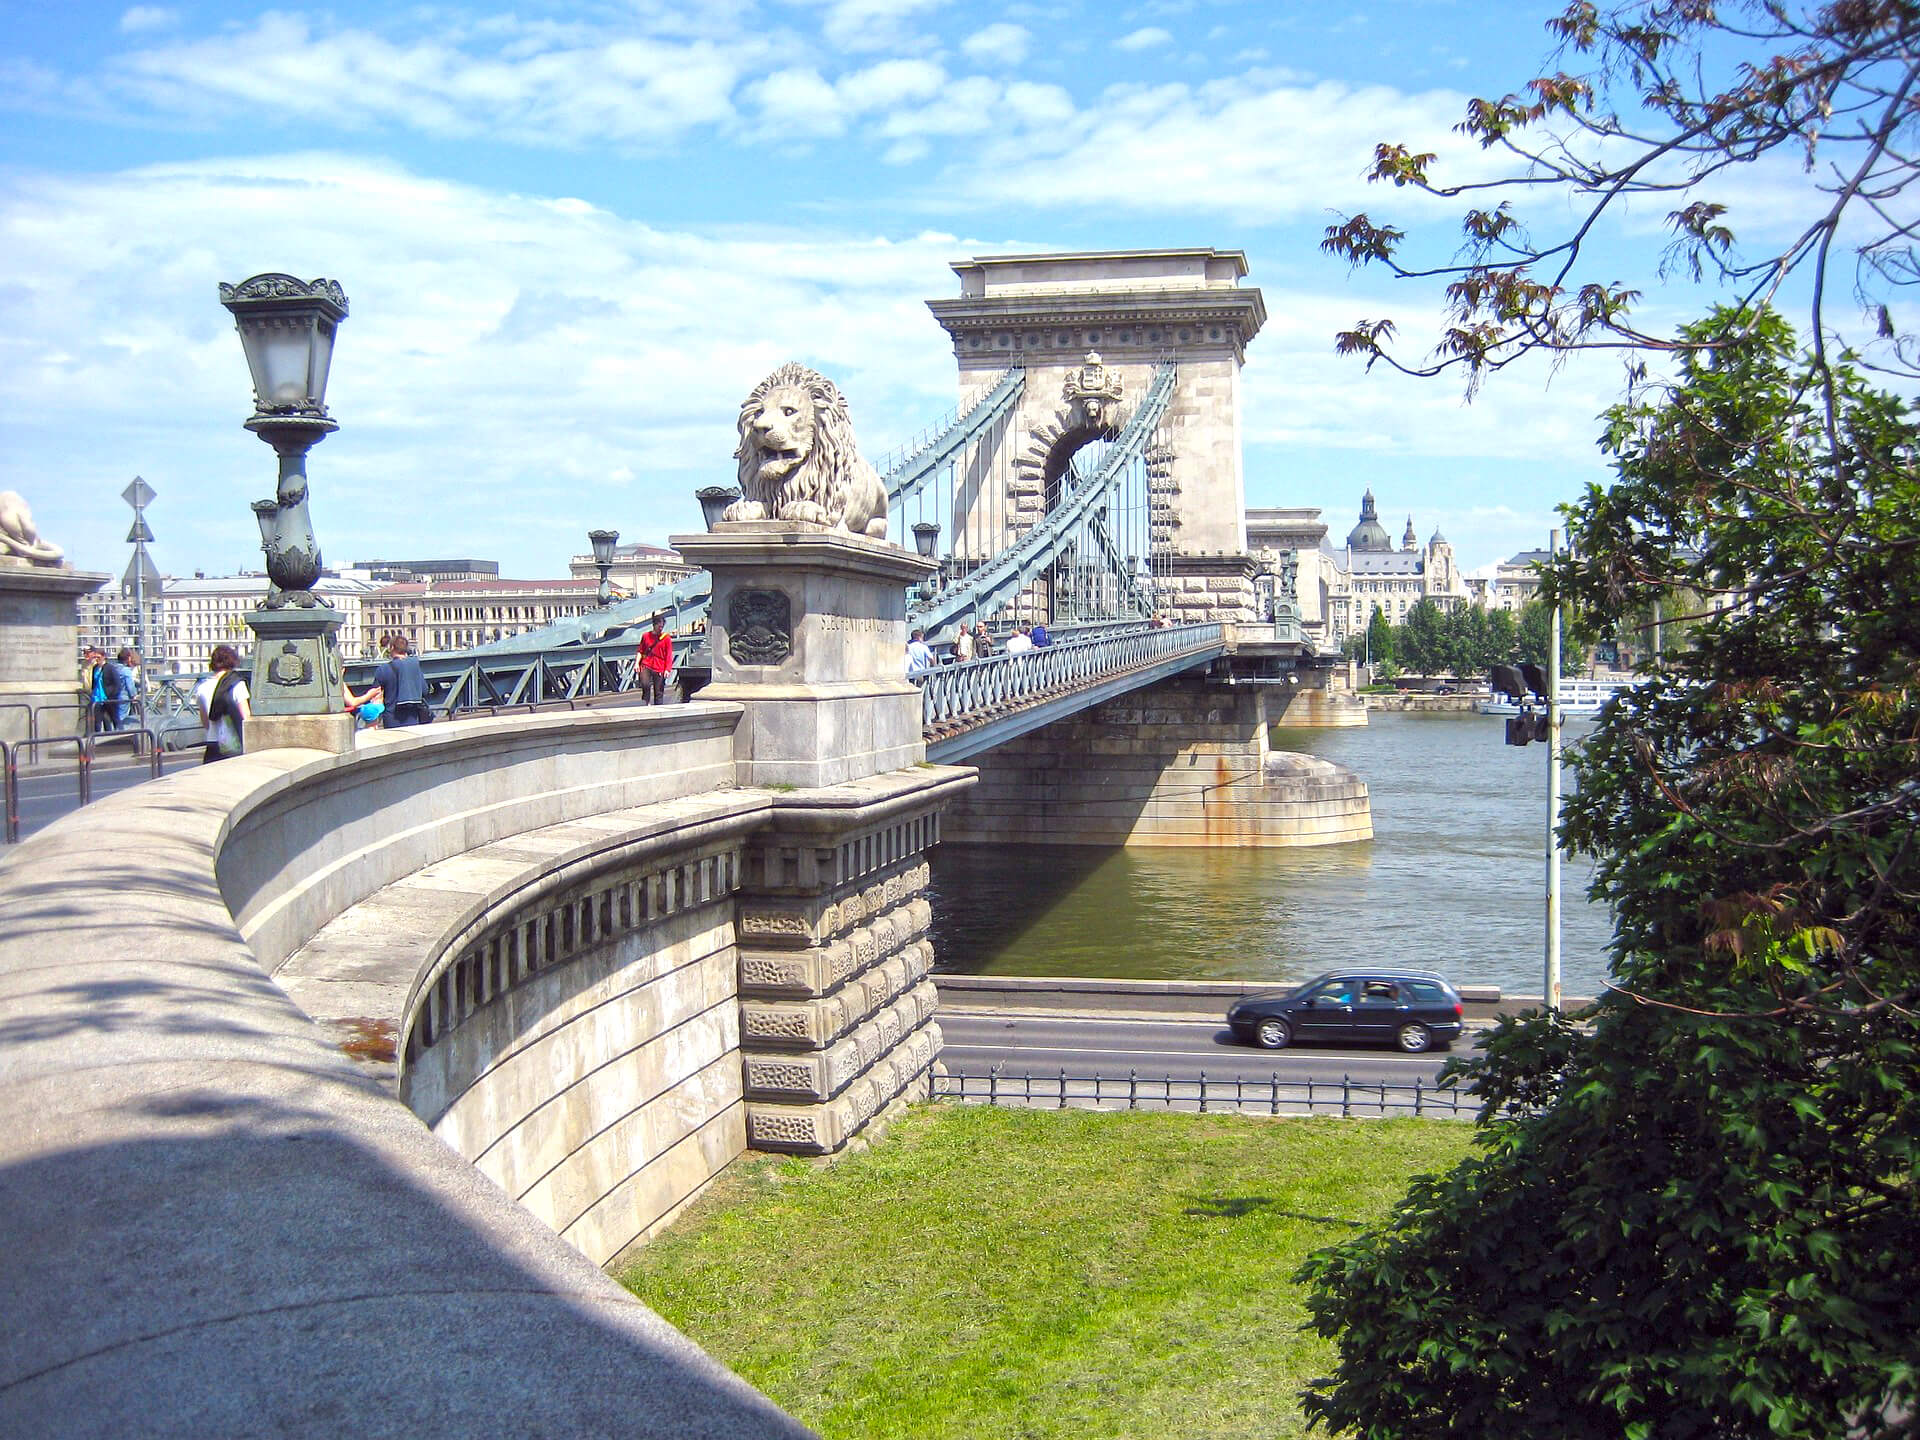 photo showing the unique design of the chain bridge